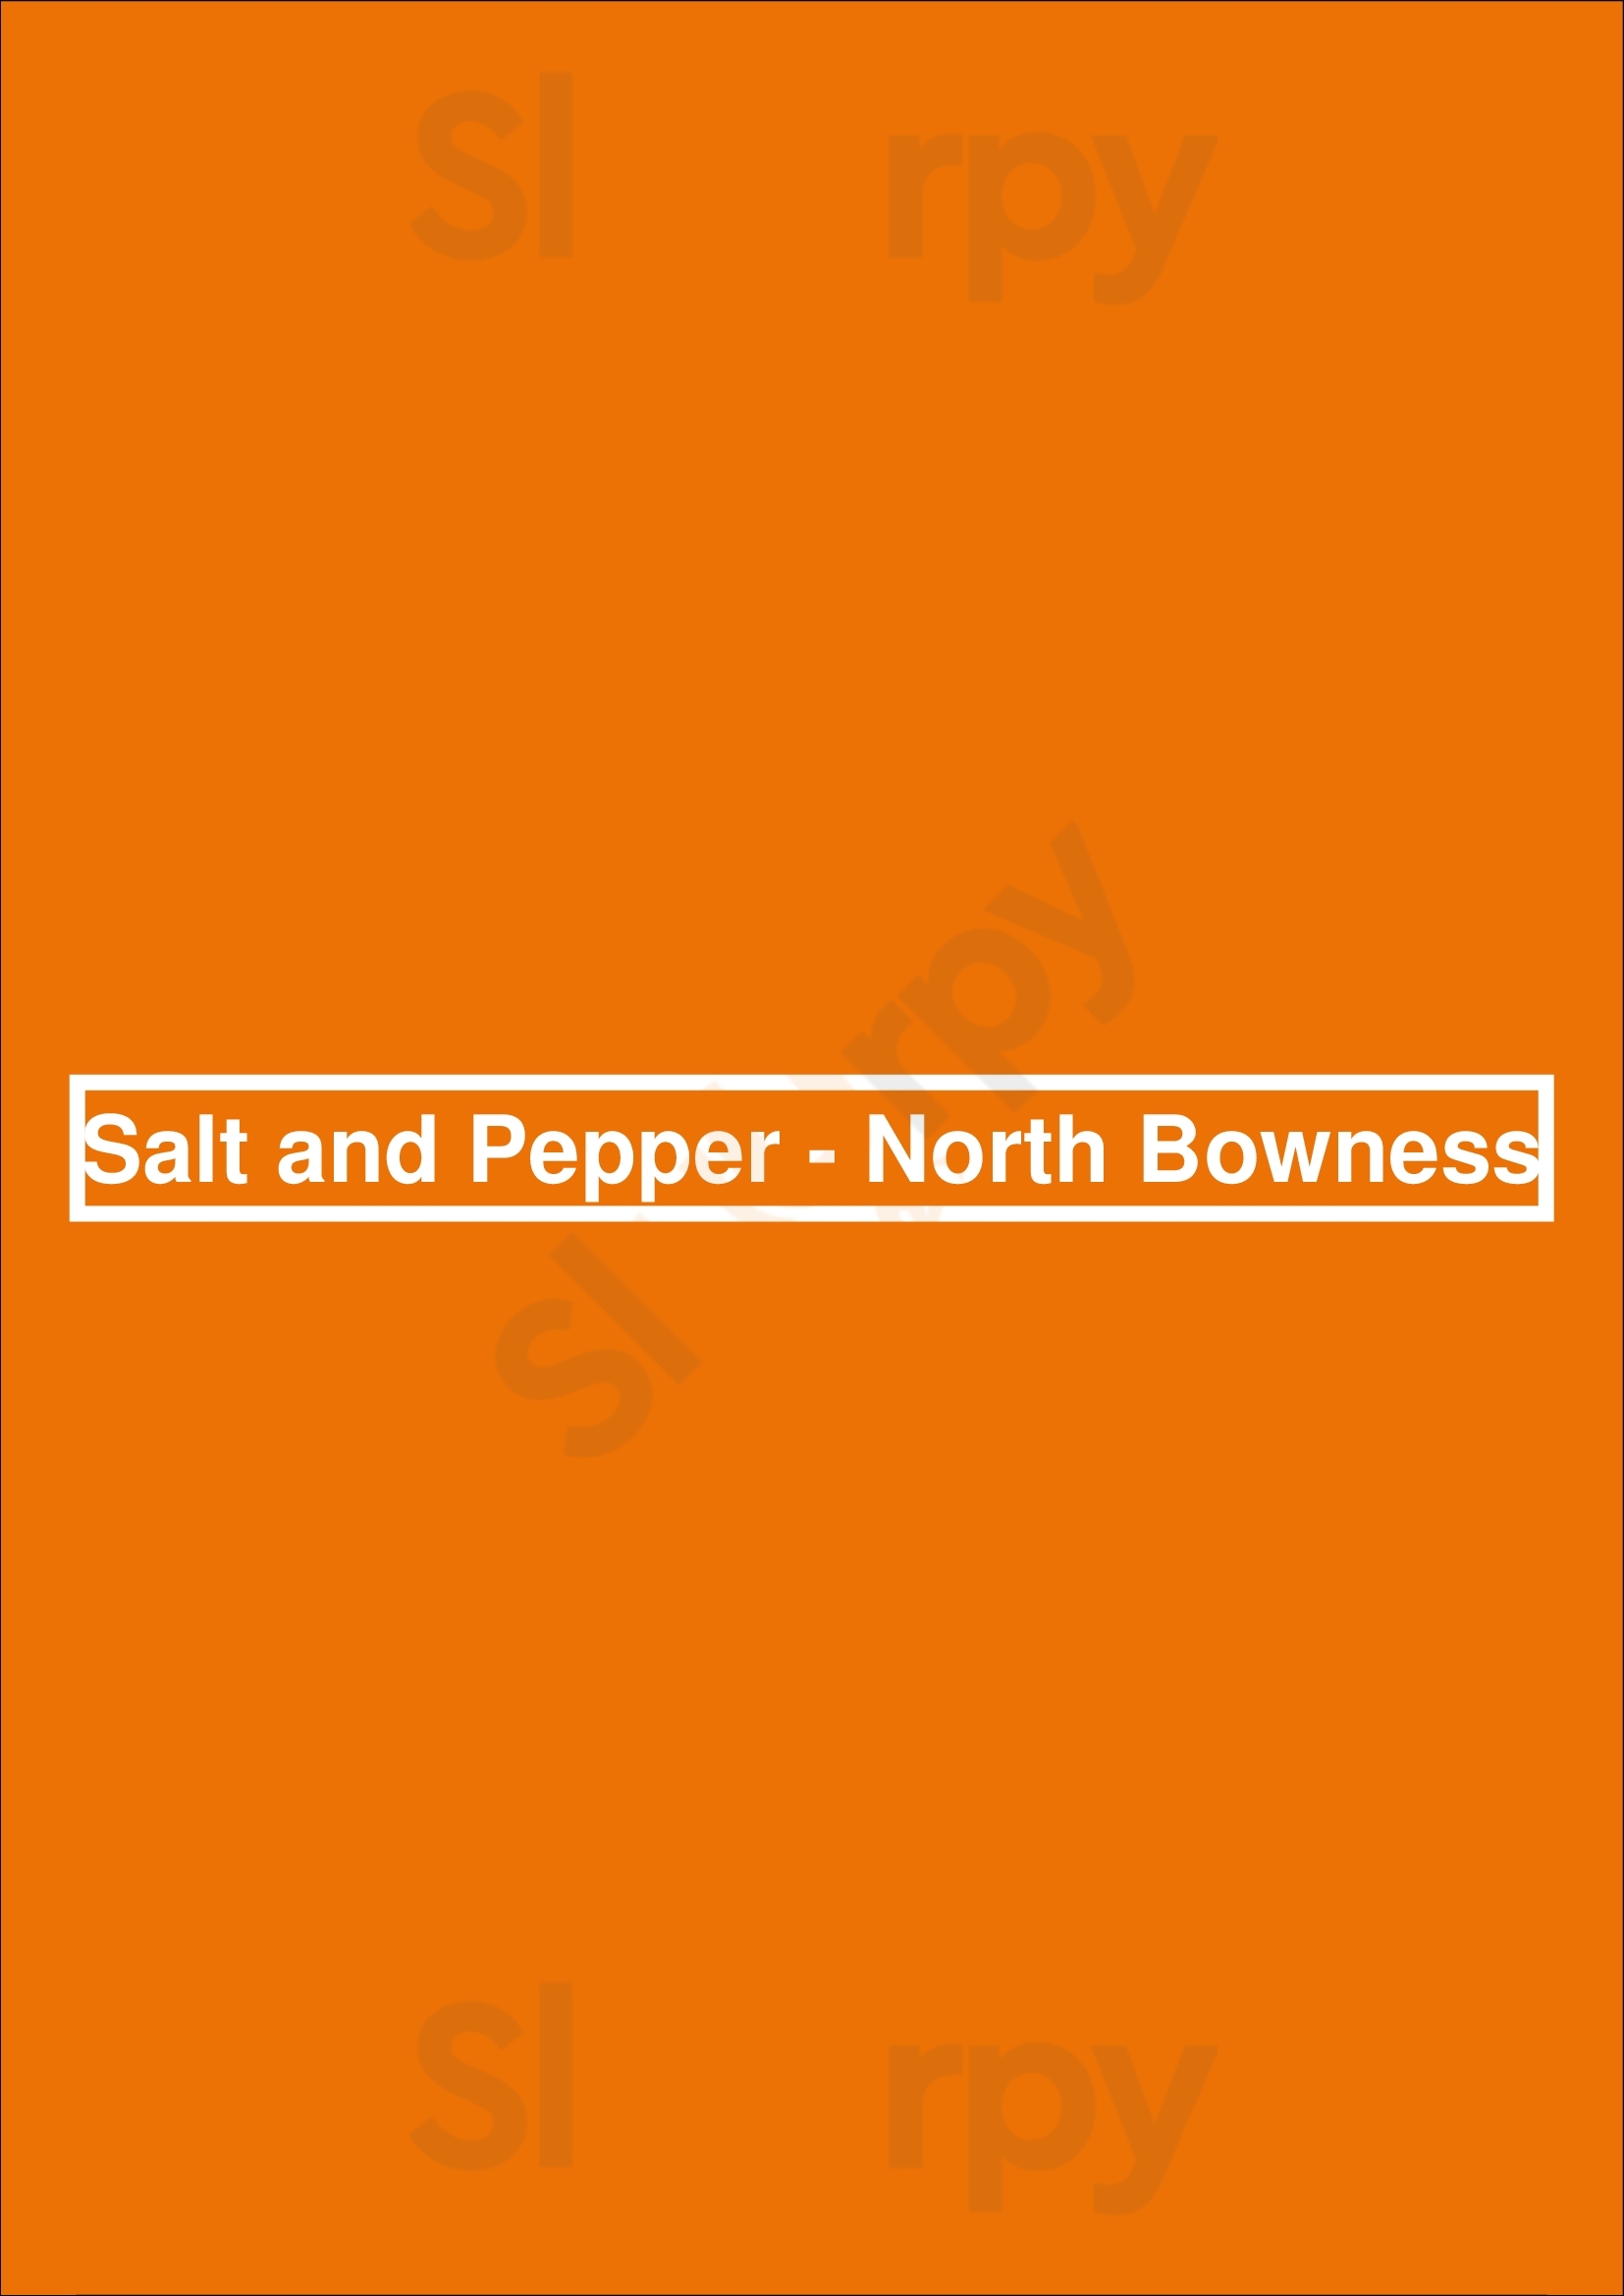 Salt And Pepper - North Bowness Calgary Menu - 1